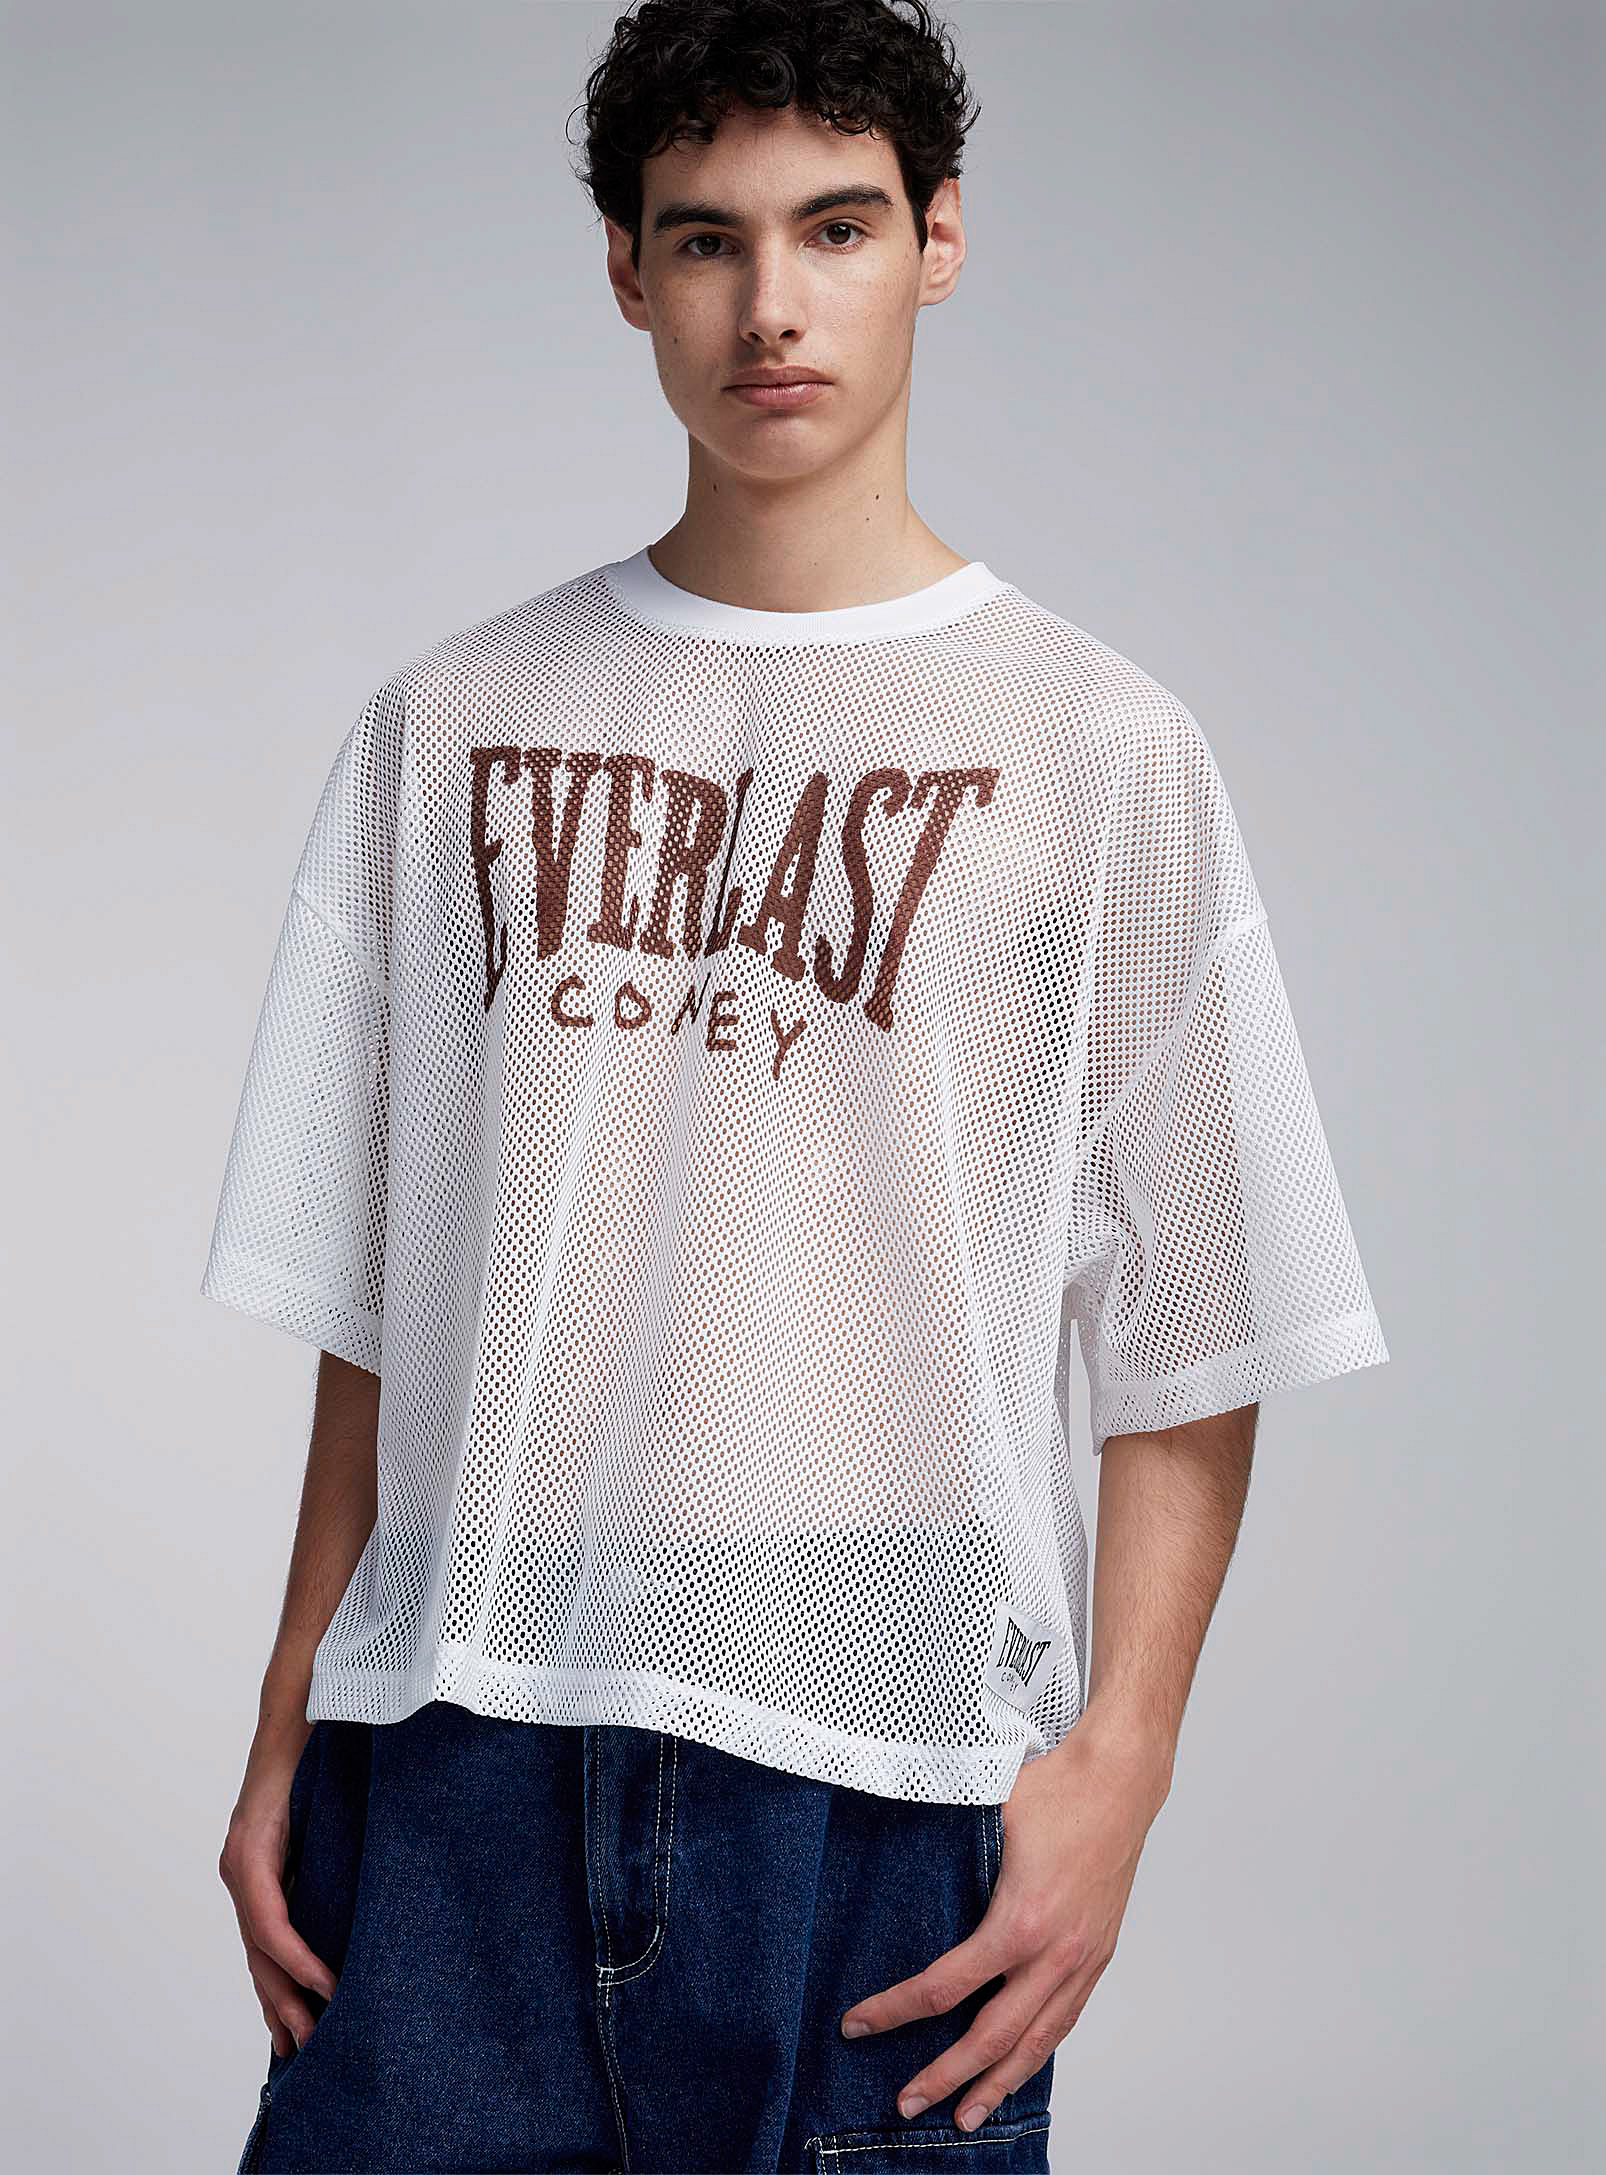 Coney Island Picnic - Le t-shirt en filet X Everlast